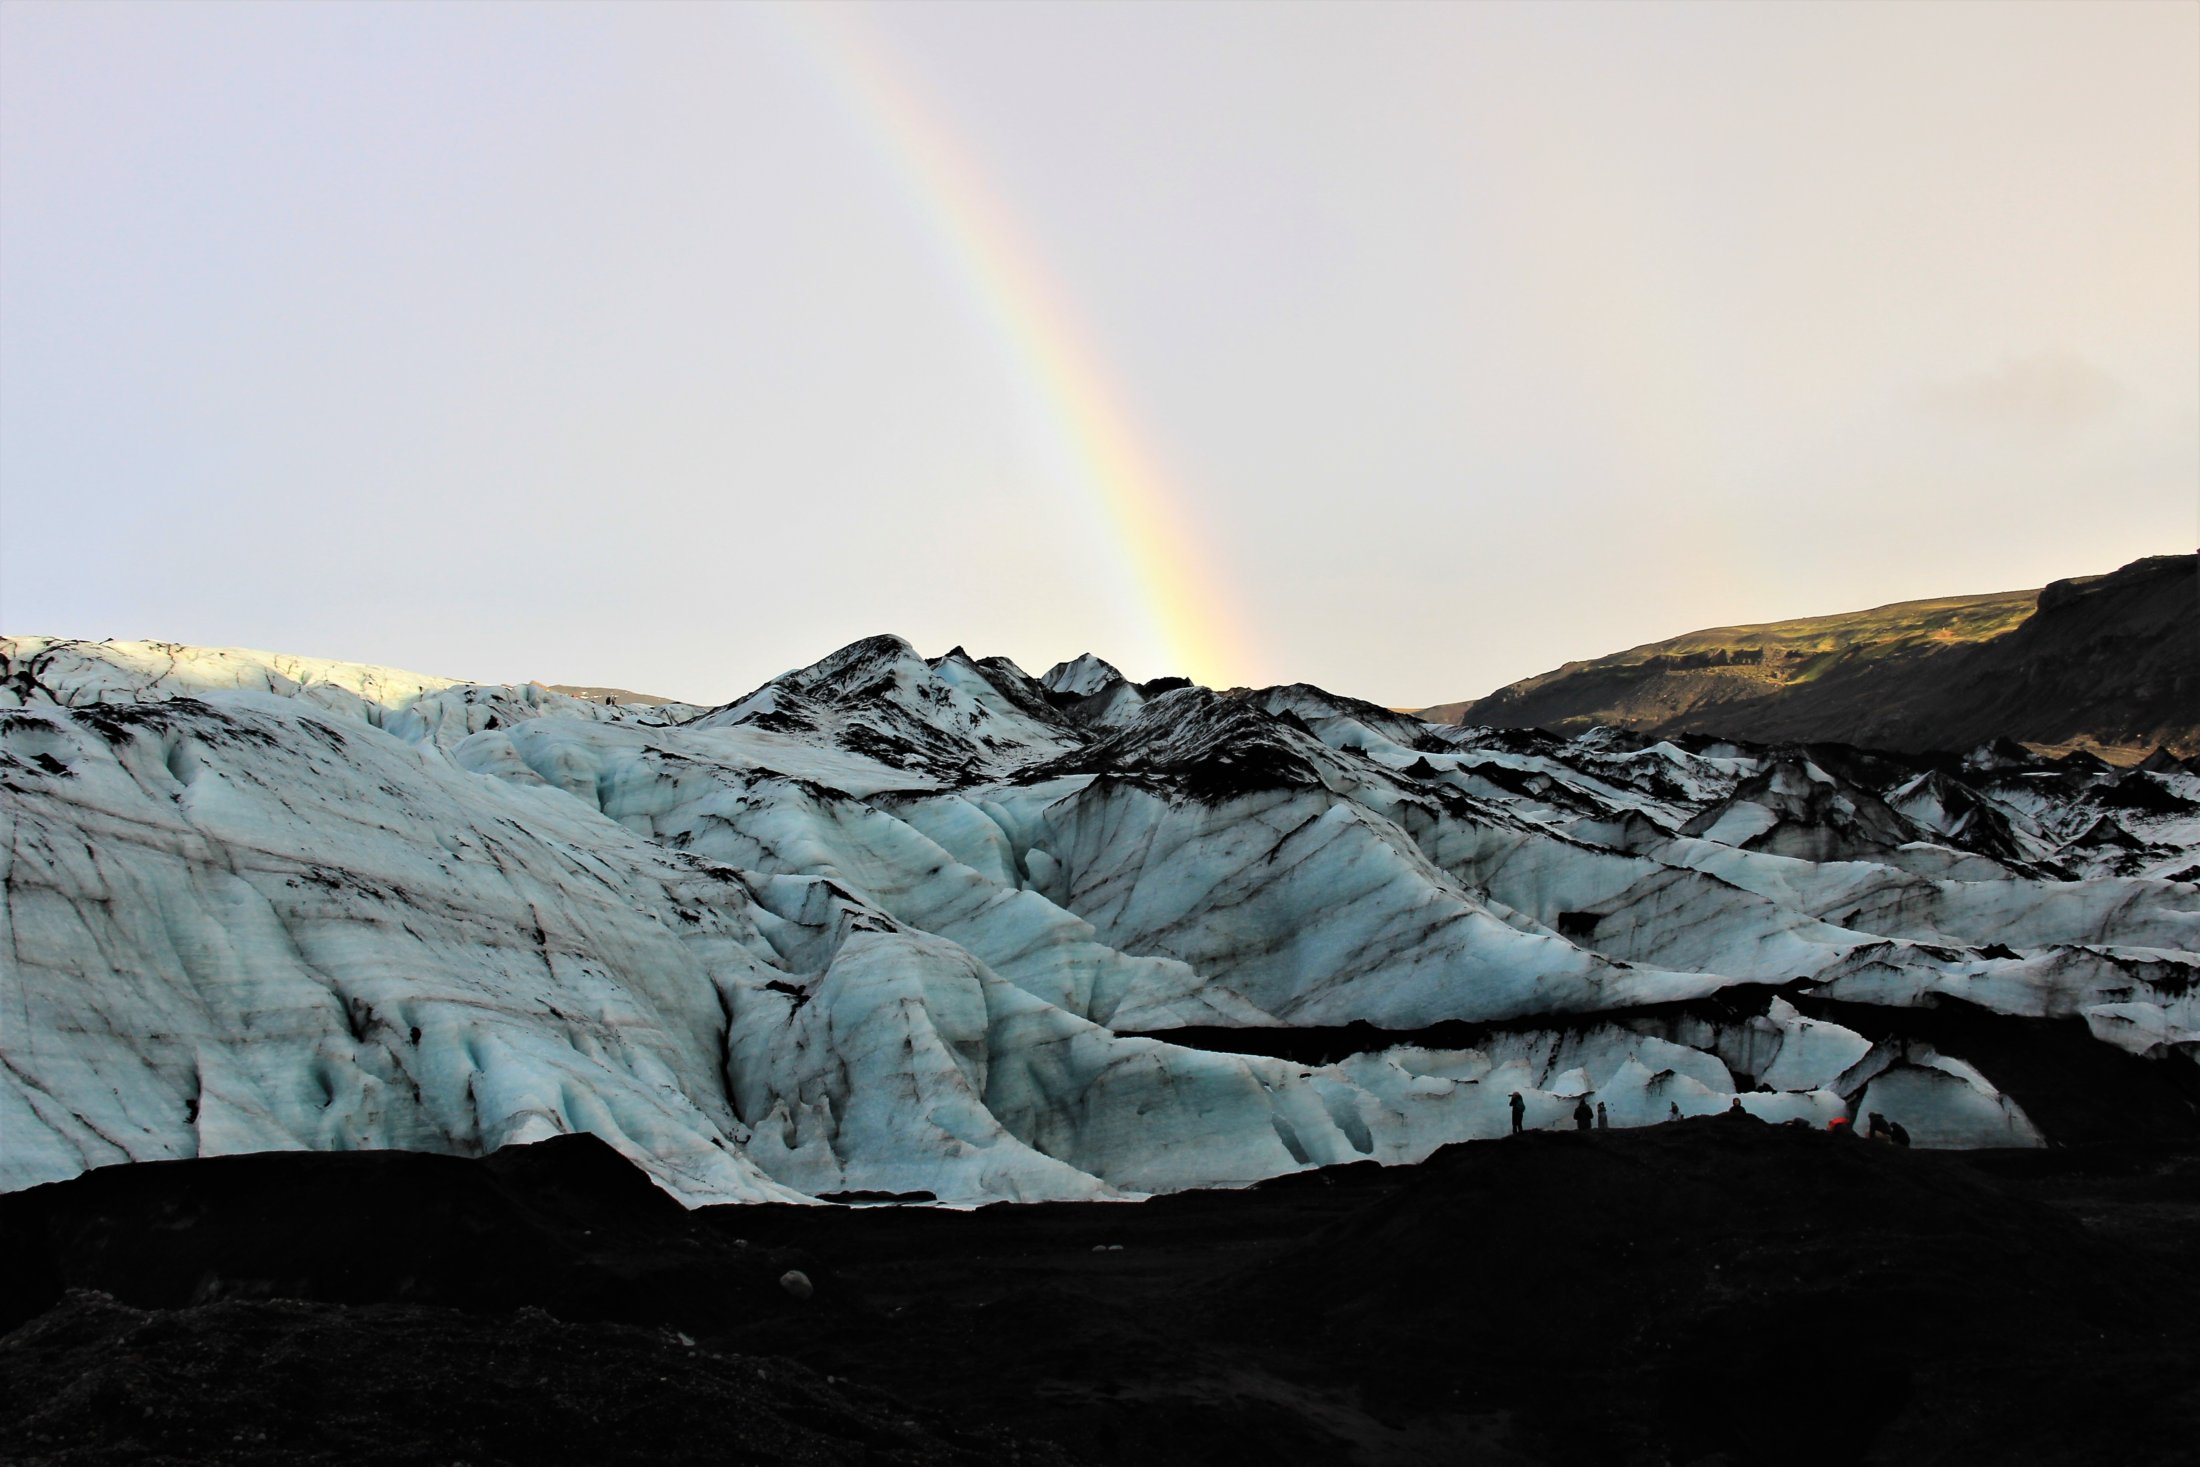 Sólheimarjökull Glacier with a rainbow